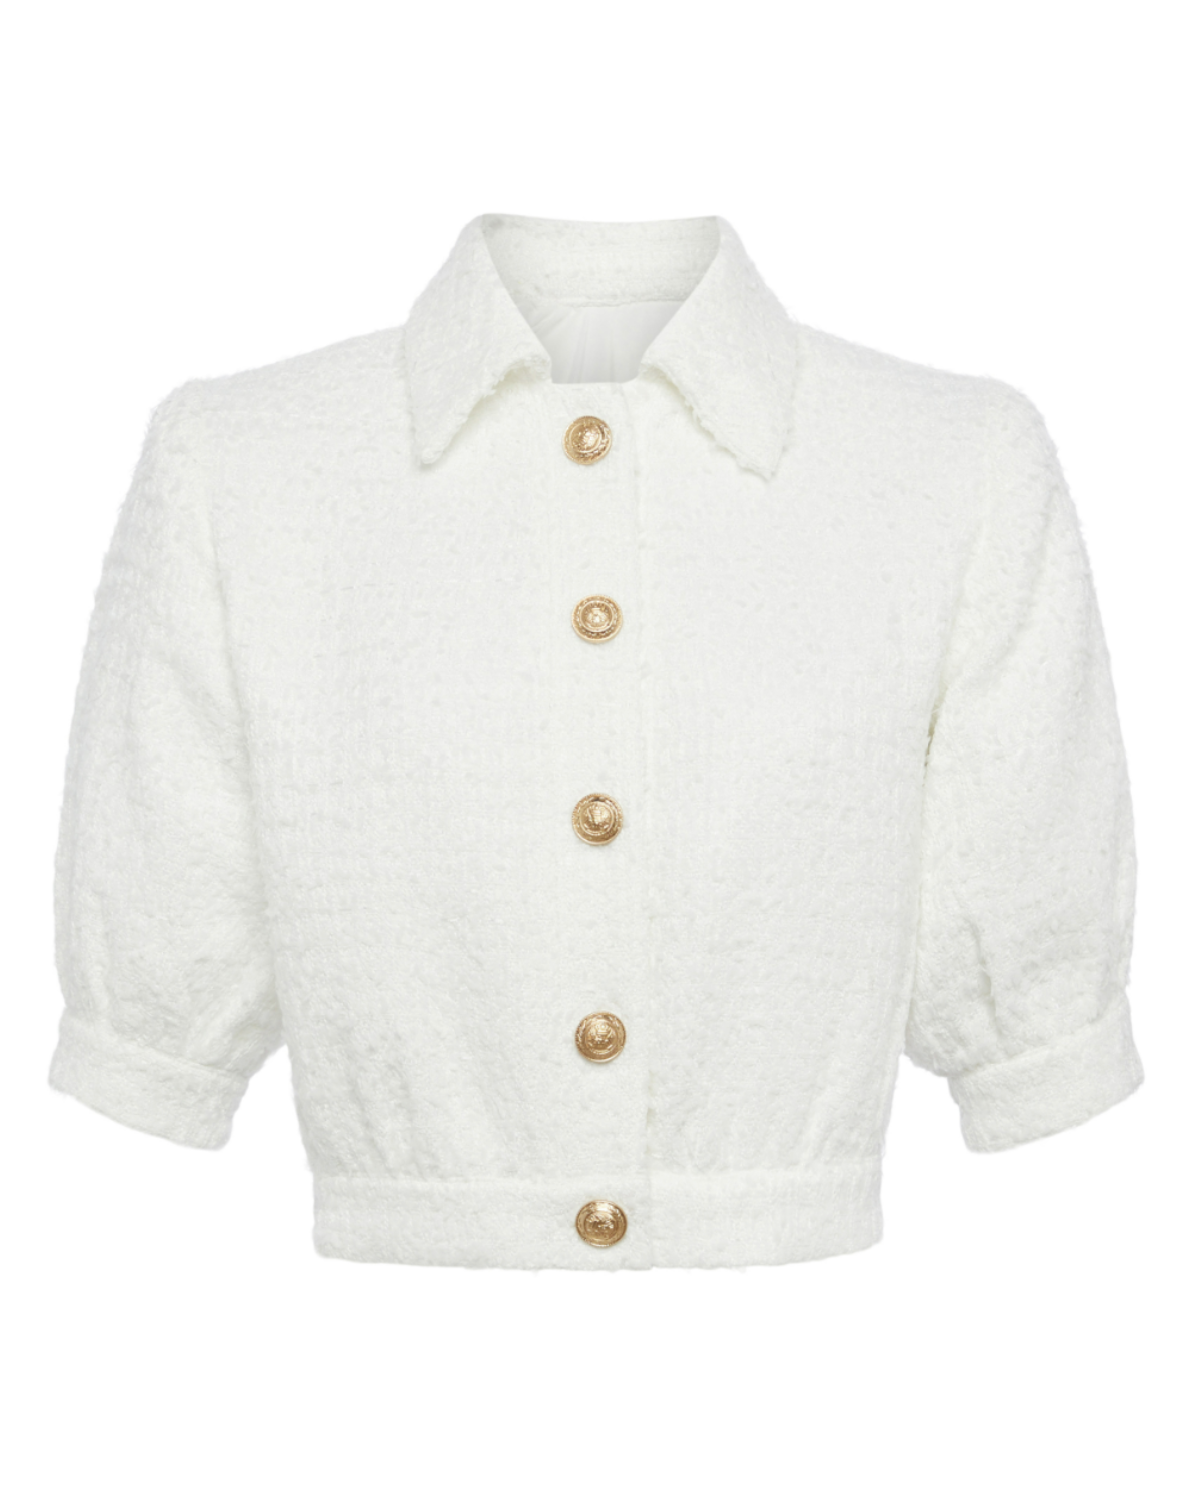 Cove Crop Short Sleeve Jacket (White)